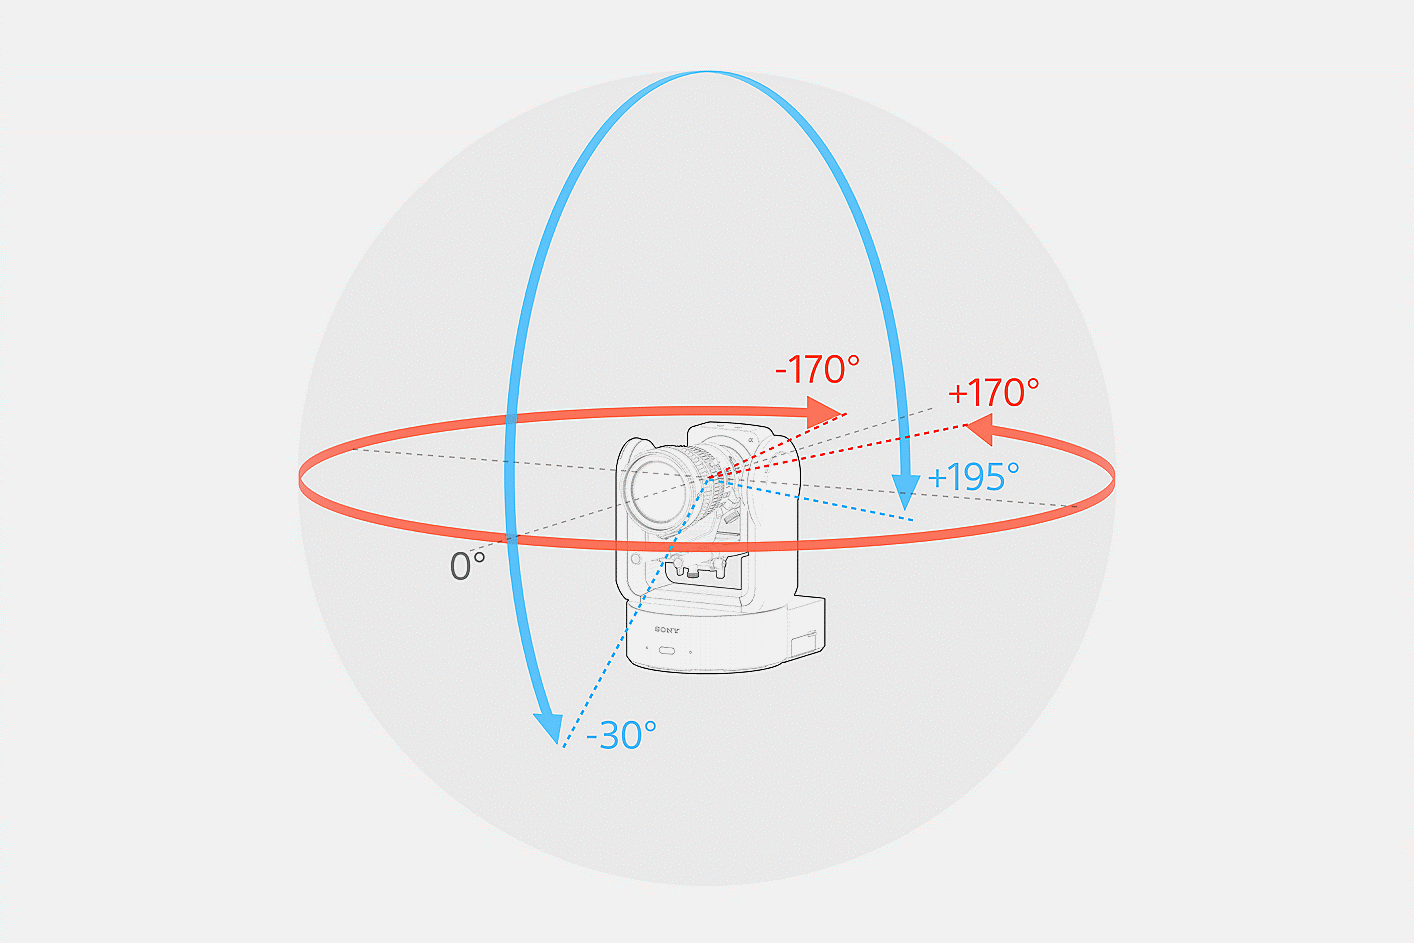 Illustration showing the pan/tilt angle